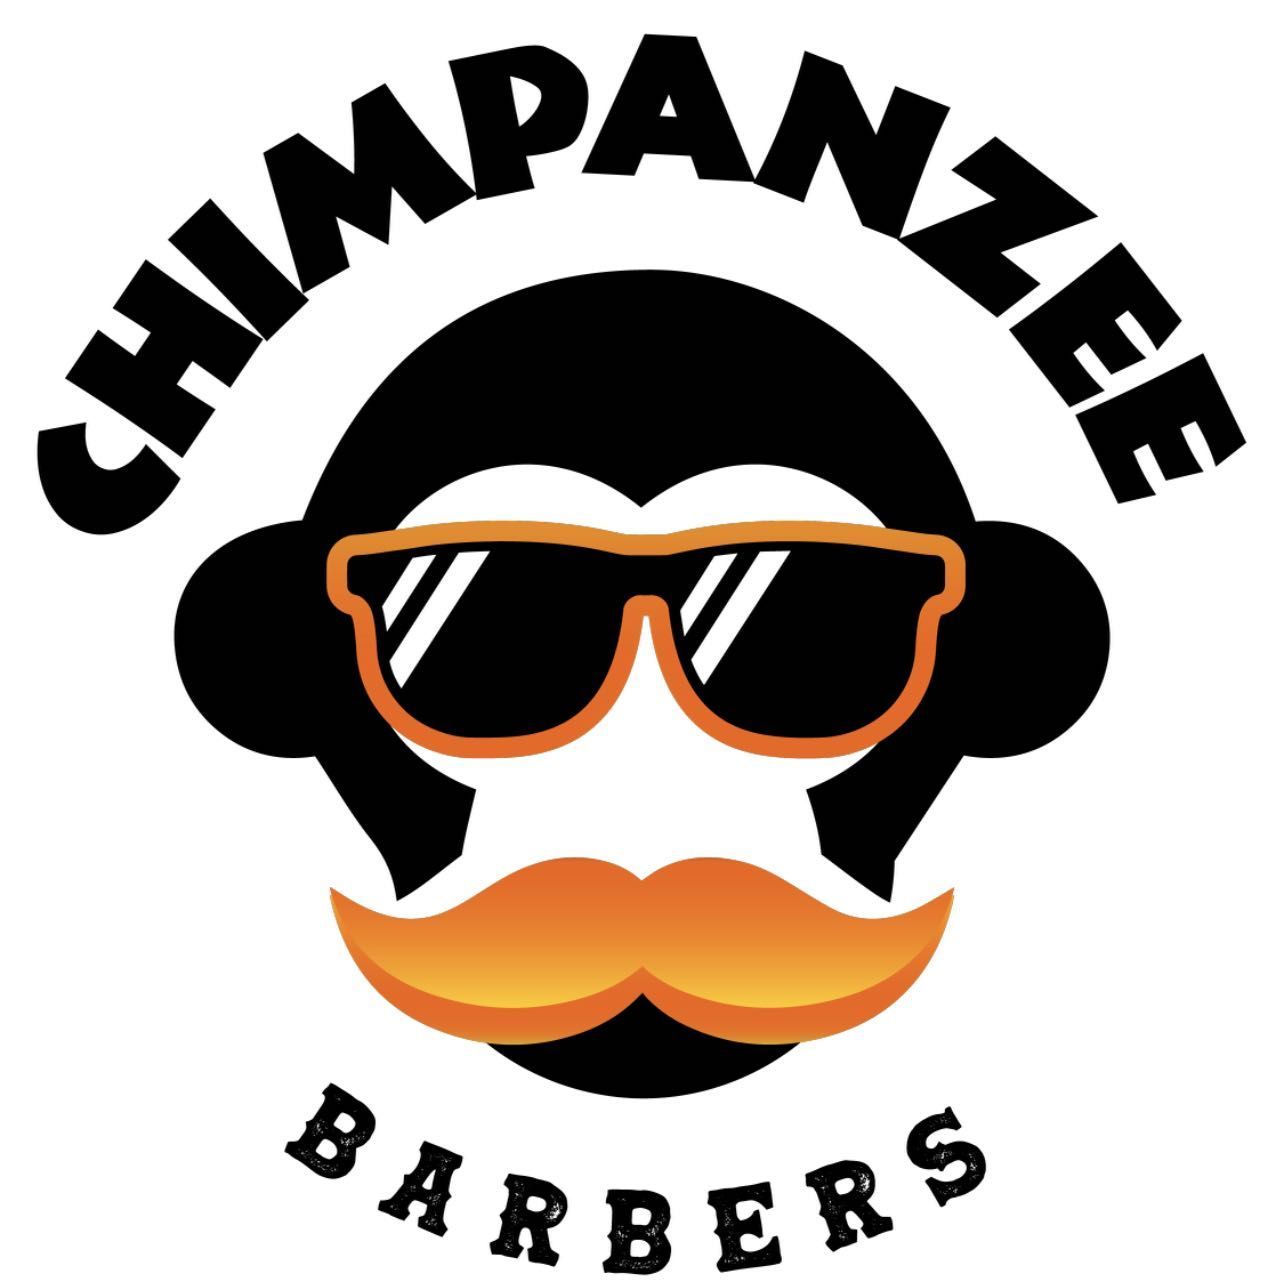 Chimpanzee Barbers - Rathmines -, Swan Shopping centre, Rathmines Rd lower, Dublin